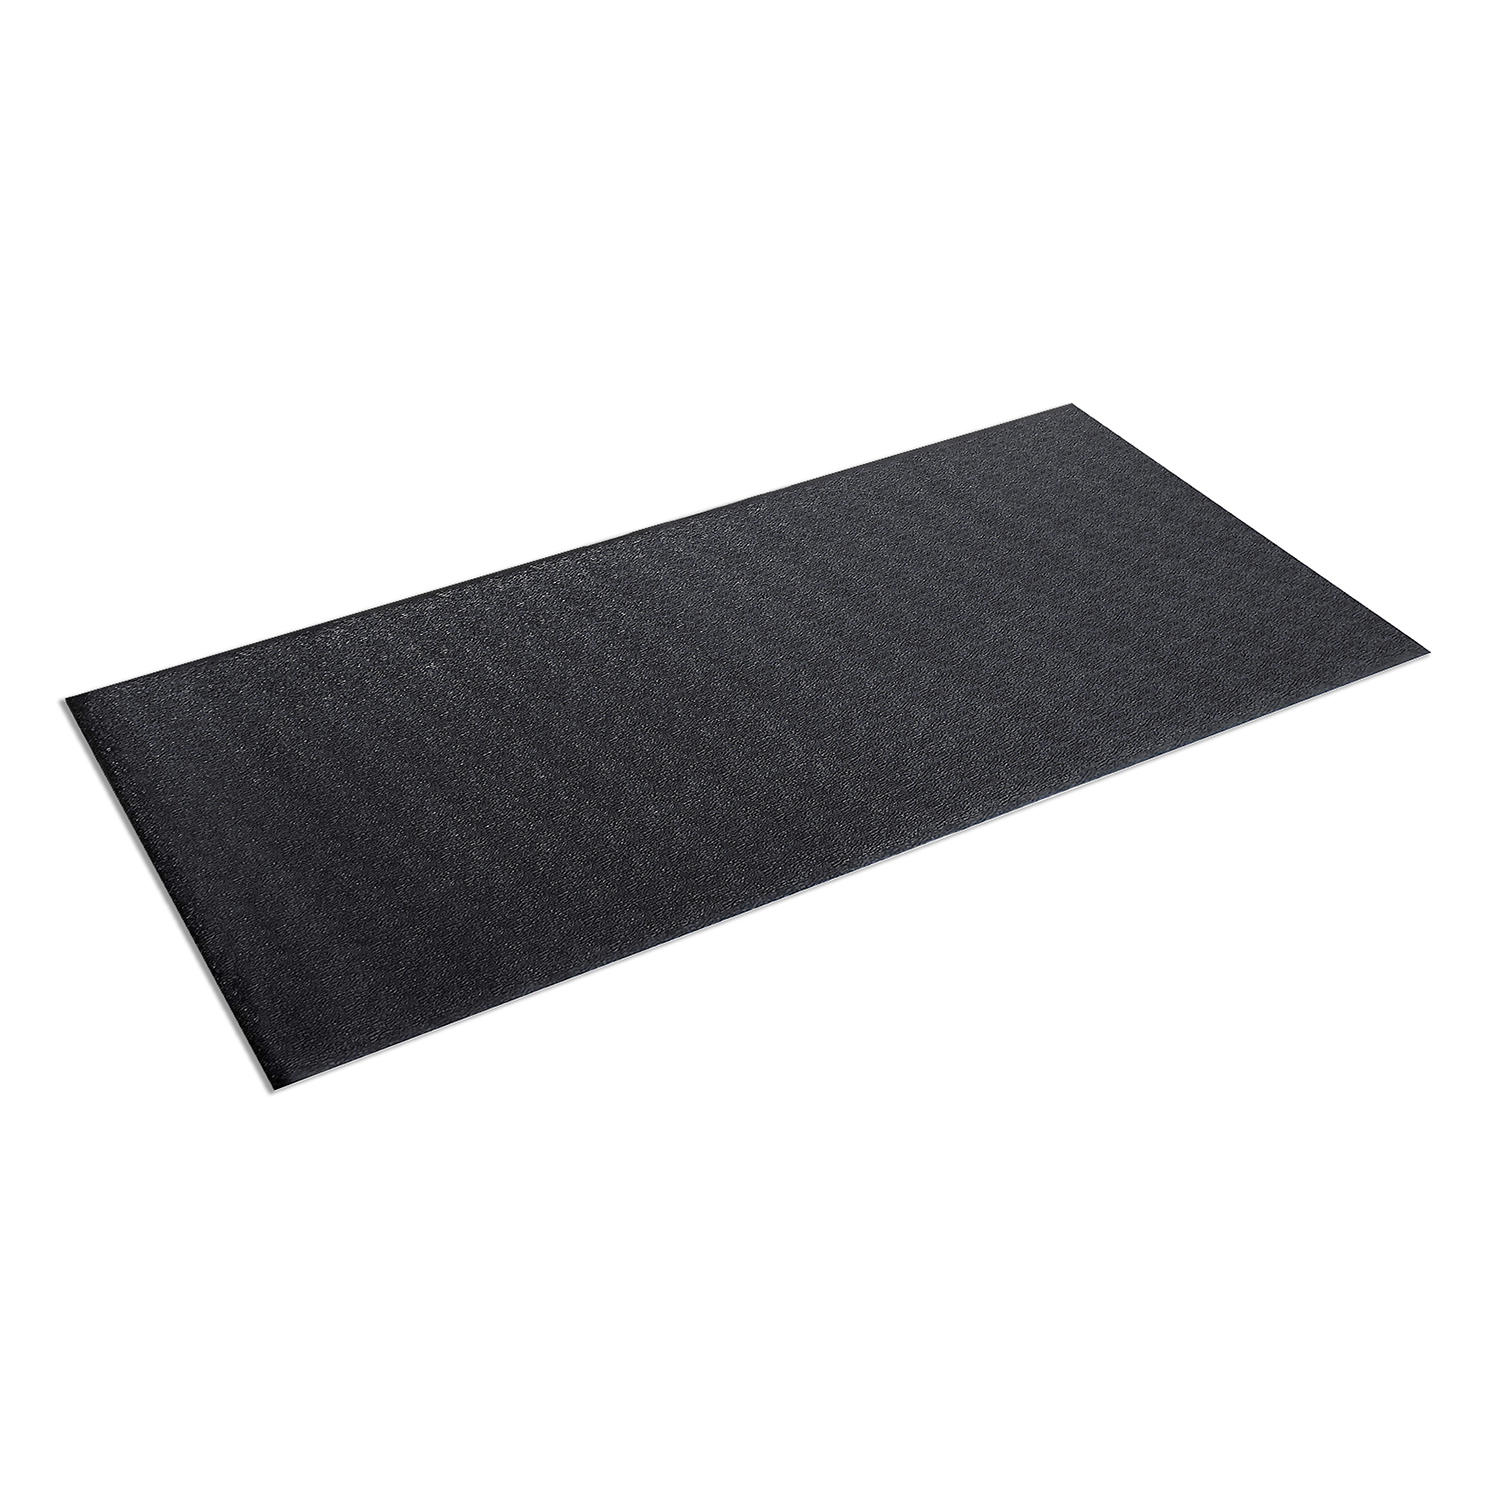 SuperMats - TreadmillMat - Standard Quality Dense Foam Vinyl - Fitness Equipment Mat, Black, 36' x 78'